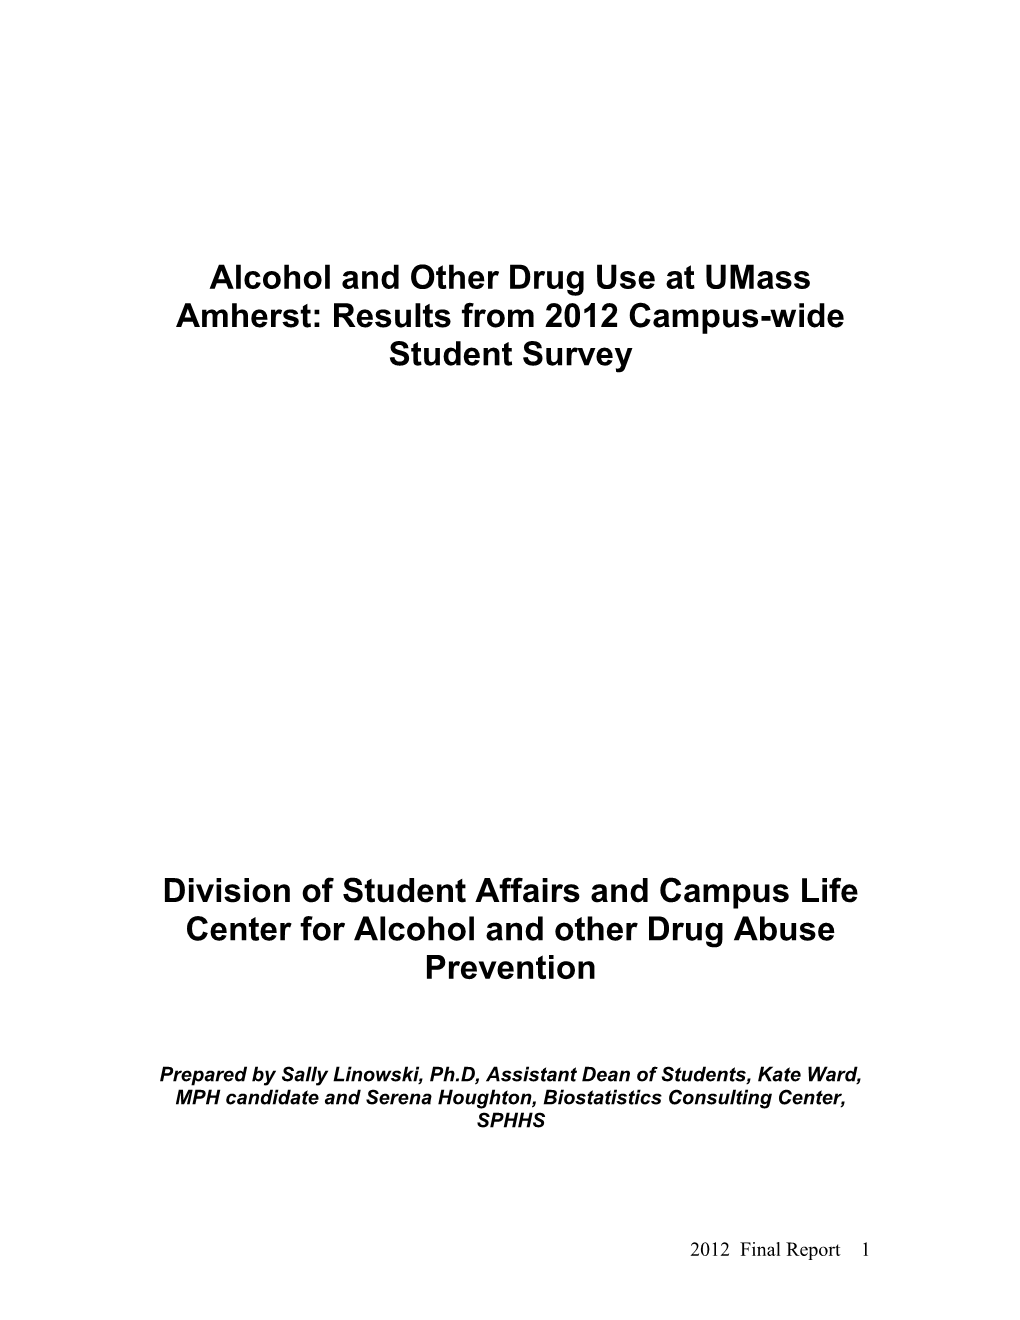 Campus Alcohol Use Survey- 2009